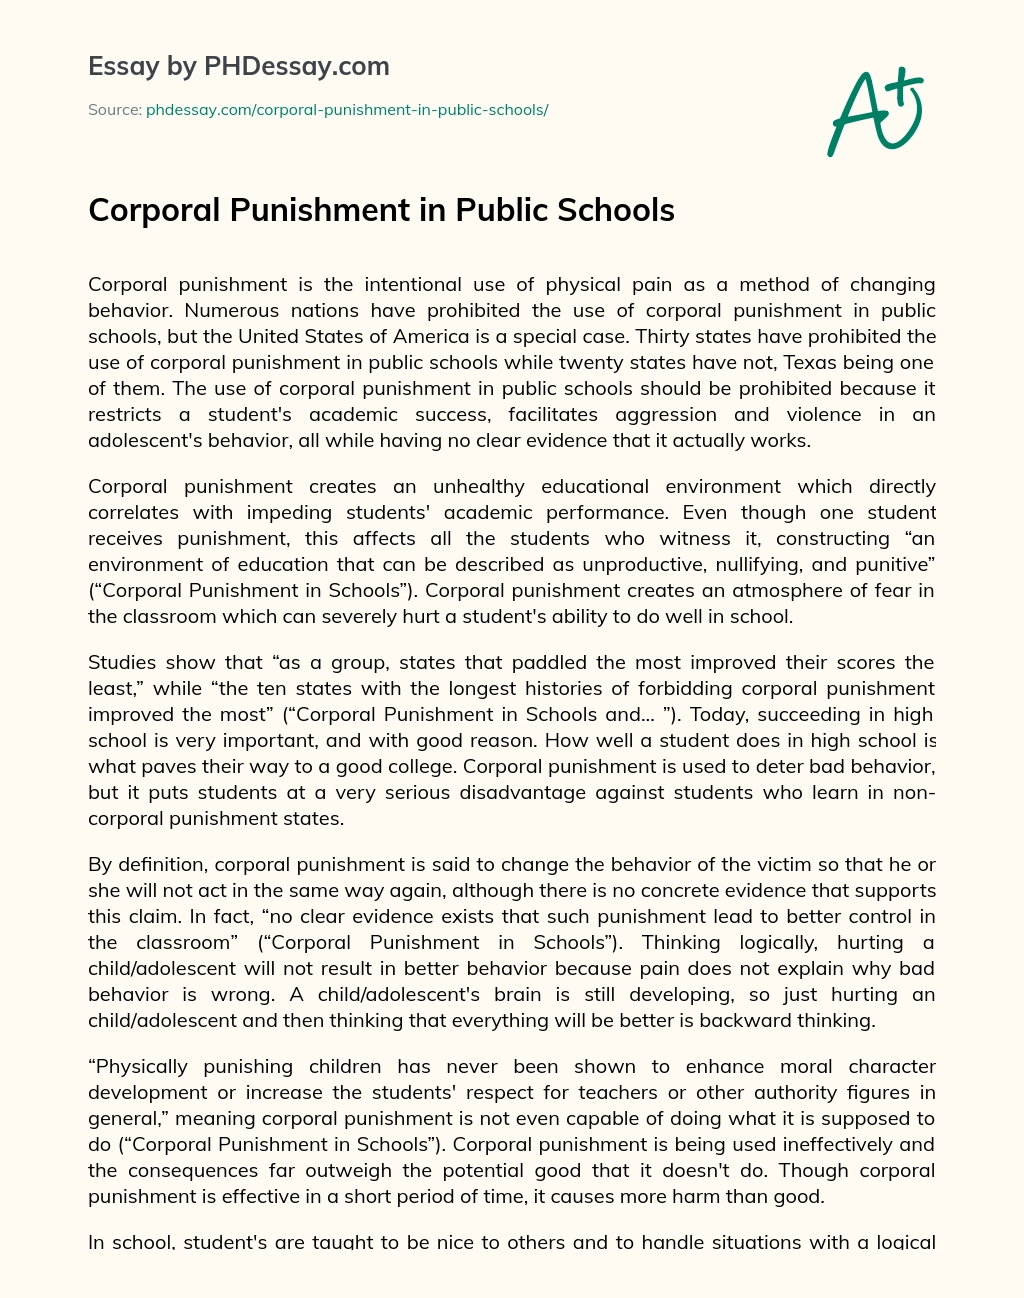 arguments against corporal punishment in schools essay